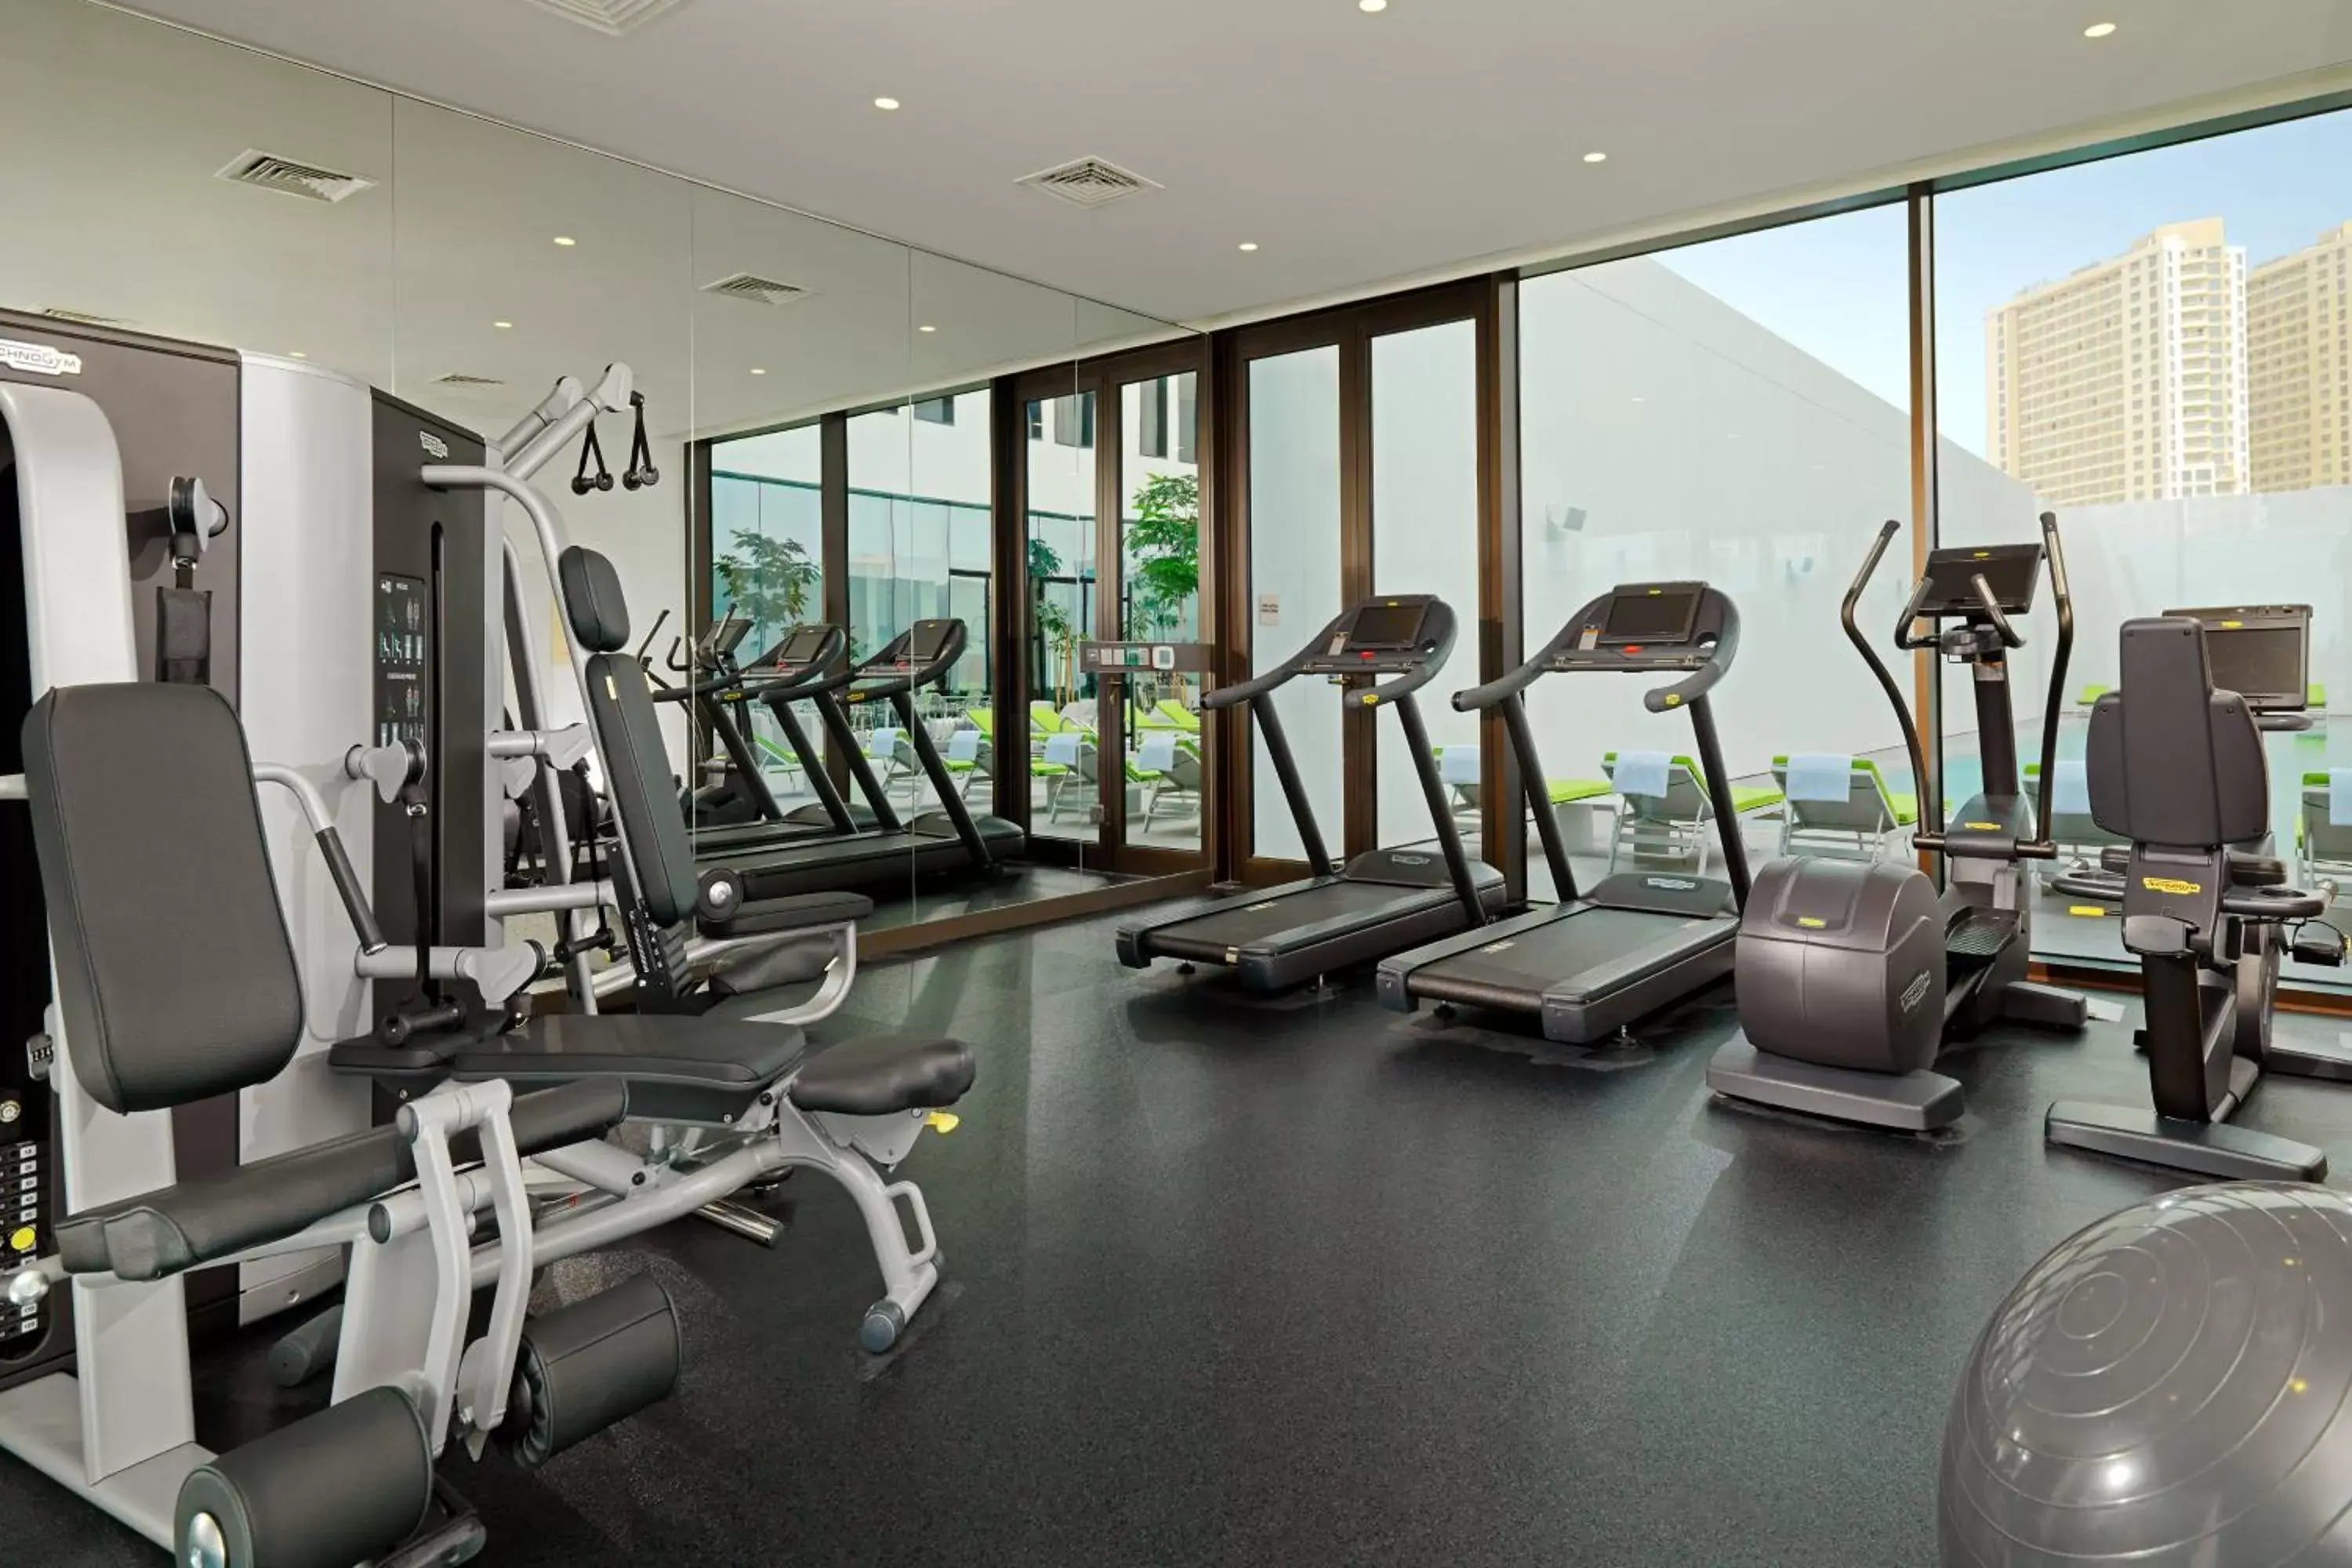 Fitness centre/facilities, Fitness Center/Facilities in Element Me'aisam, Dubai